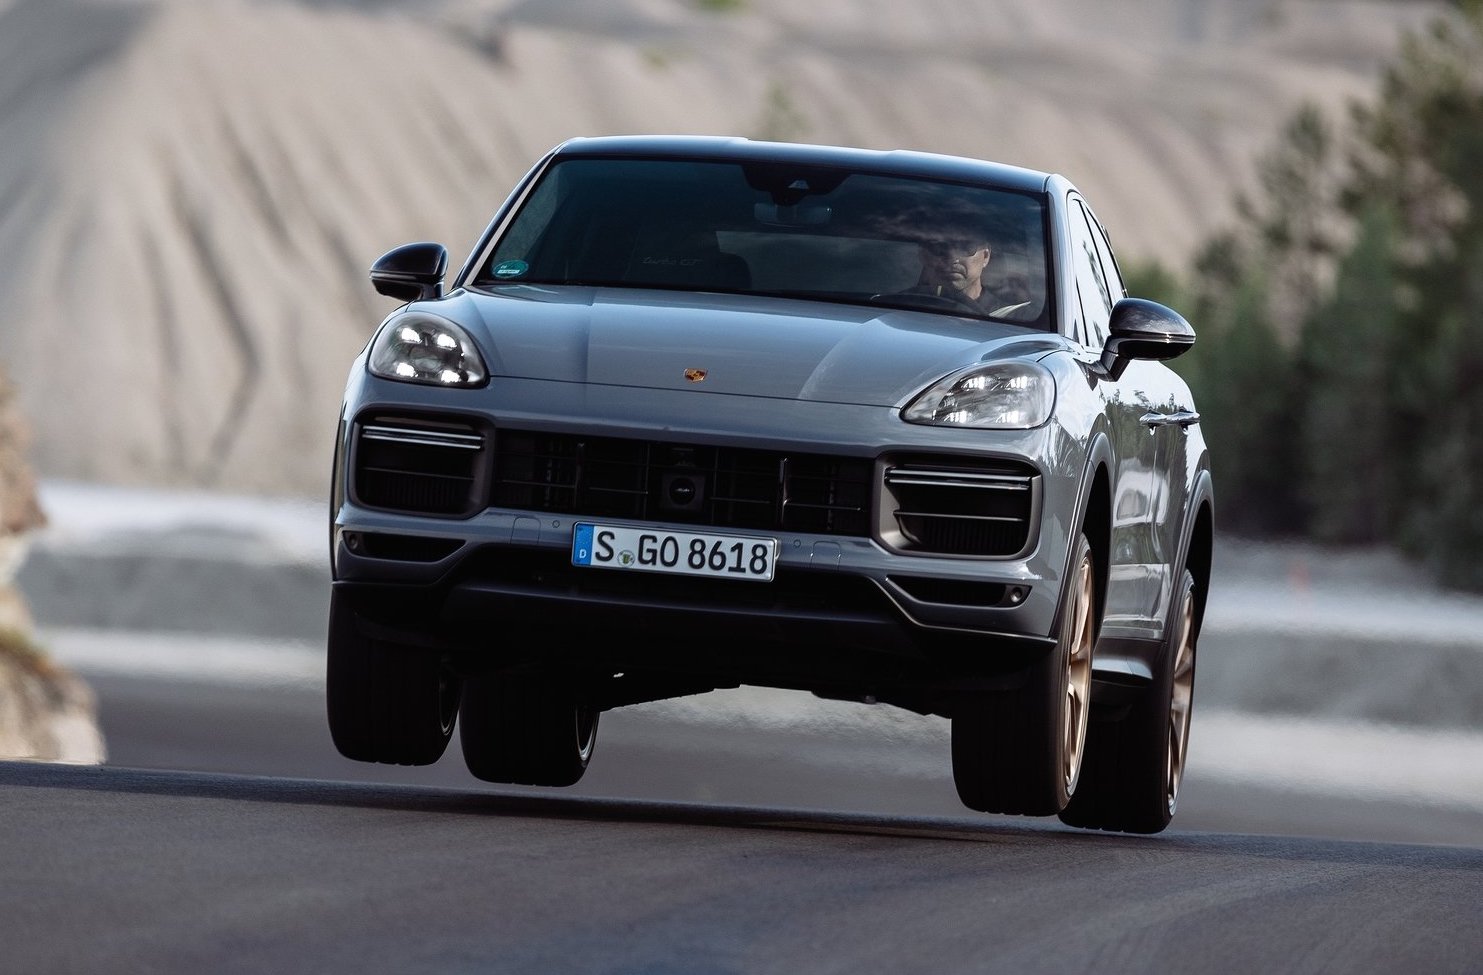 Porsche global sales down 5% in Q1 2022, profits up 17.4%